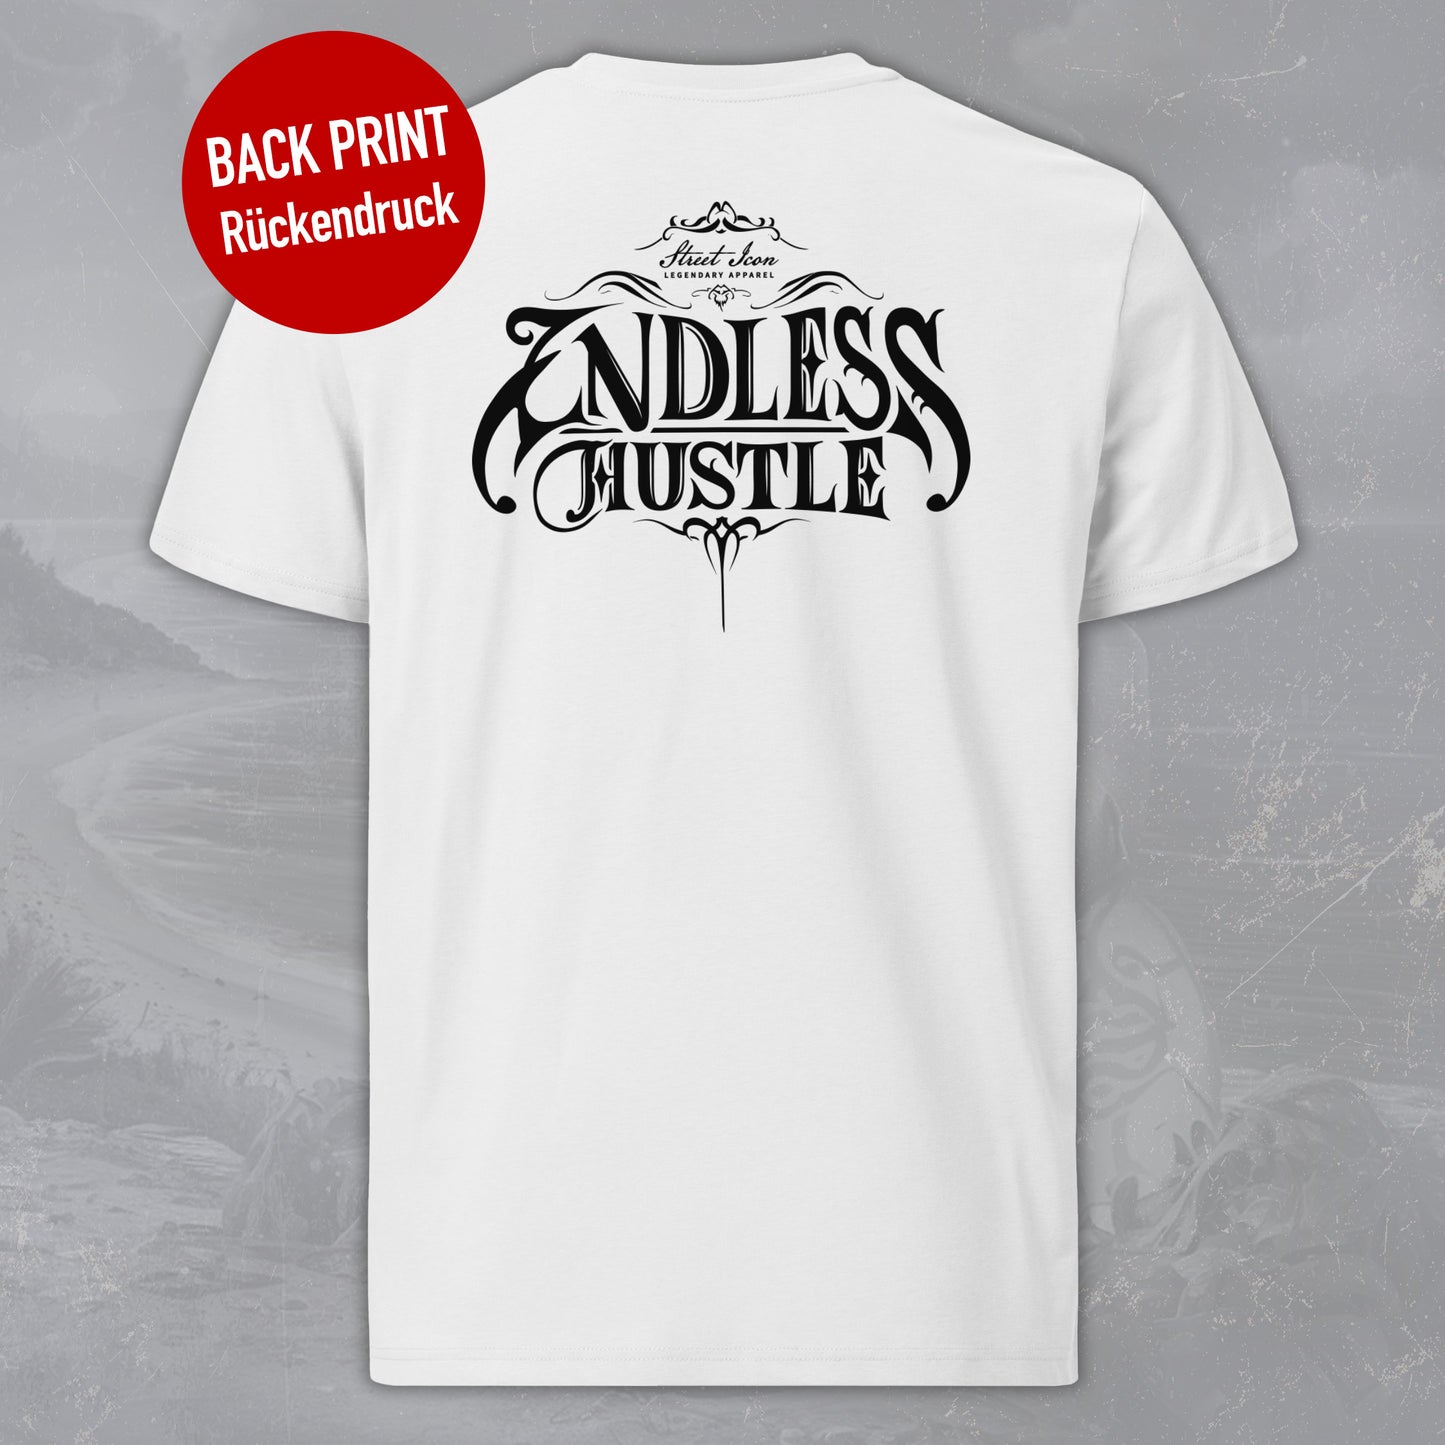 Endless Hustle - Premium T-Shirt mit großem Rückendruck